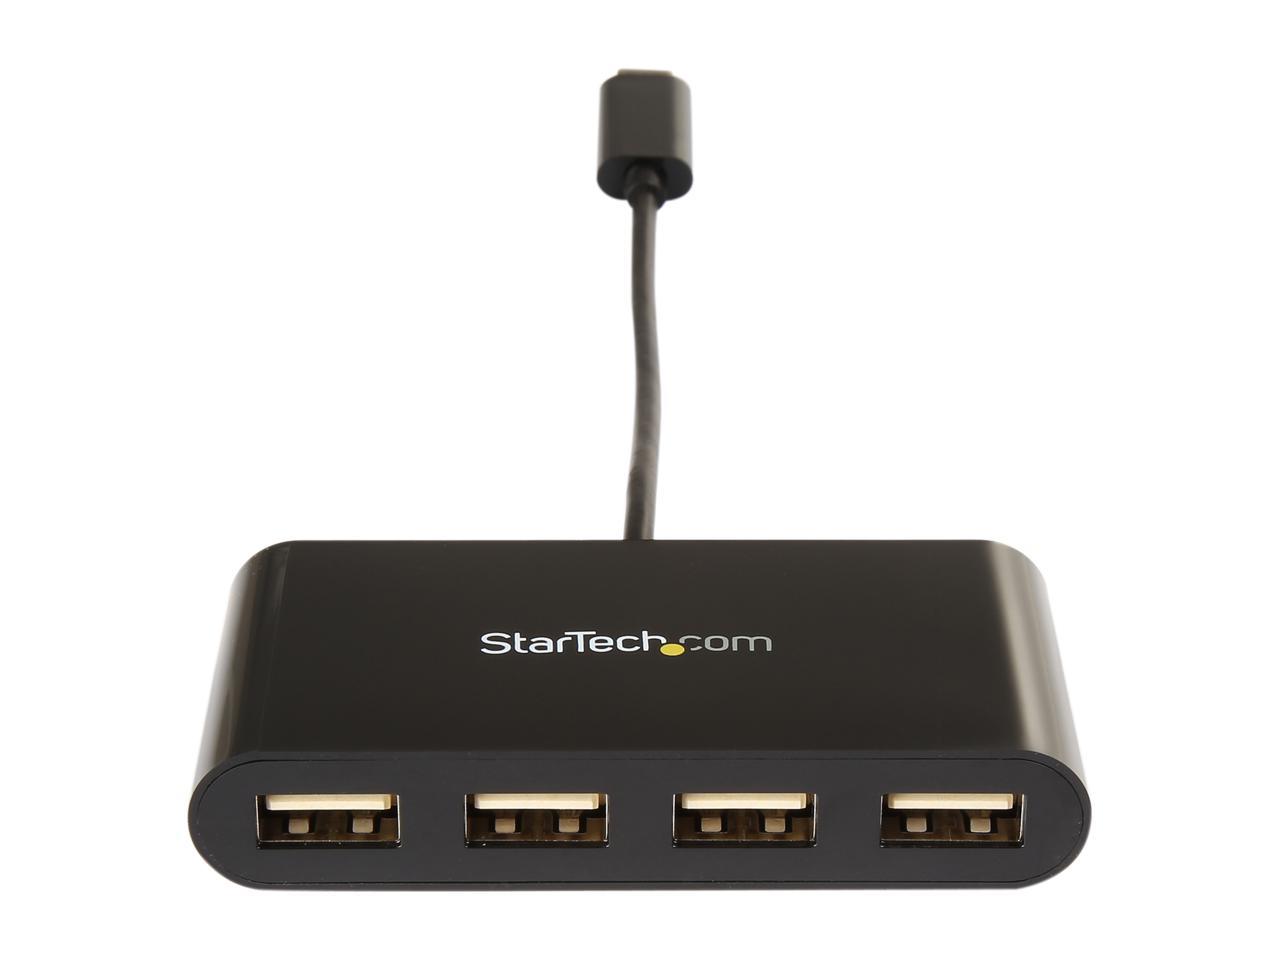 StarTech.com ST4200MINIC USB C Hub 4 Port - USB-C to 4 x USB-A - Powered USB Hub - USB 2.0 Hub - USB Port Expander - USB Port Hub - USB Type C Hub - image 2 of 4